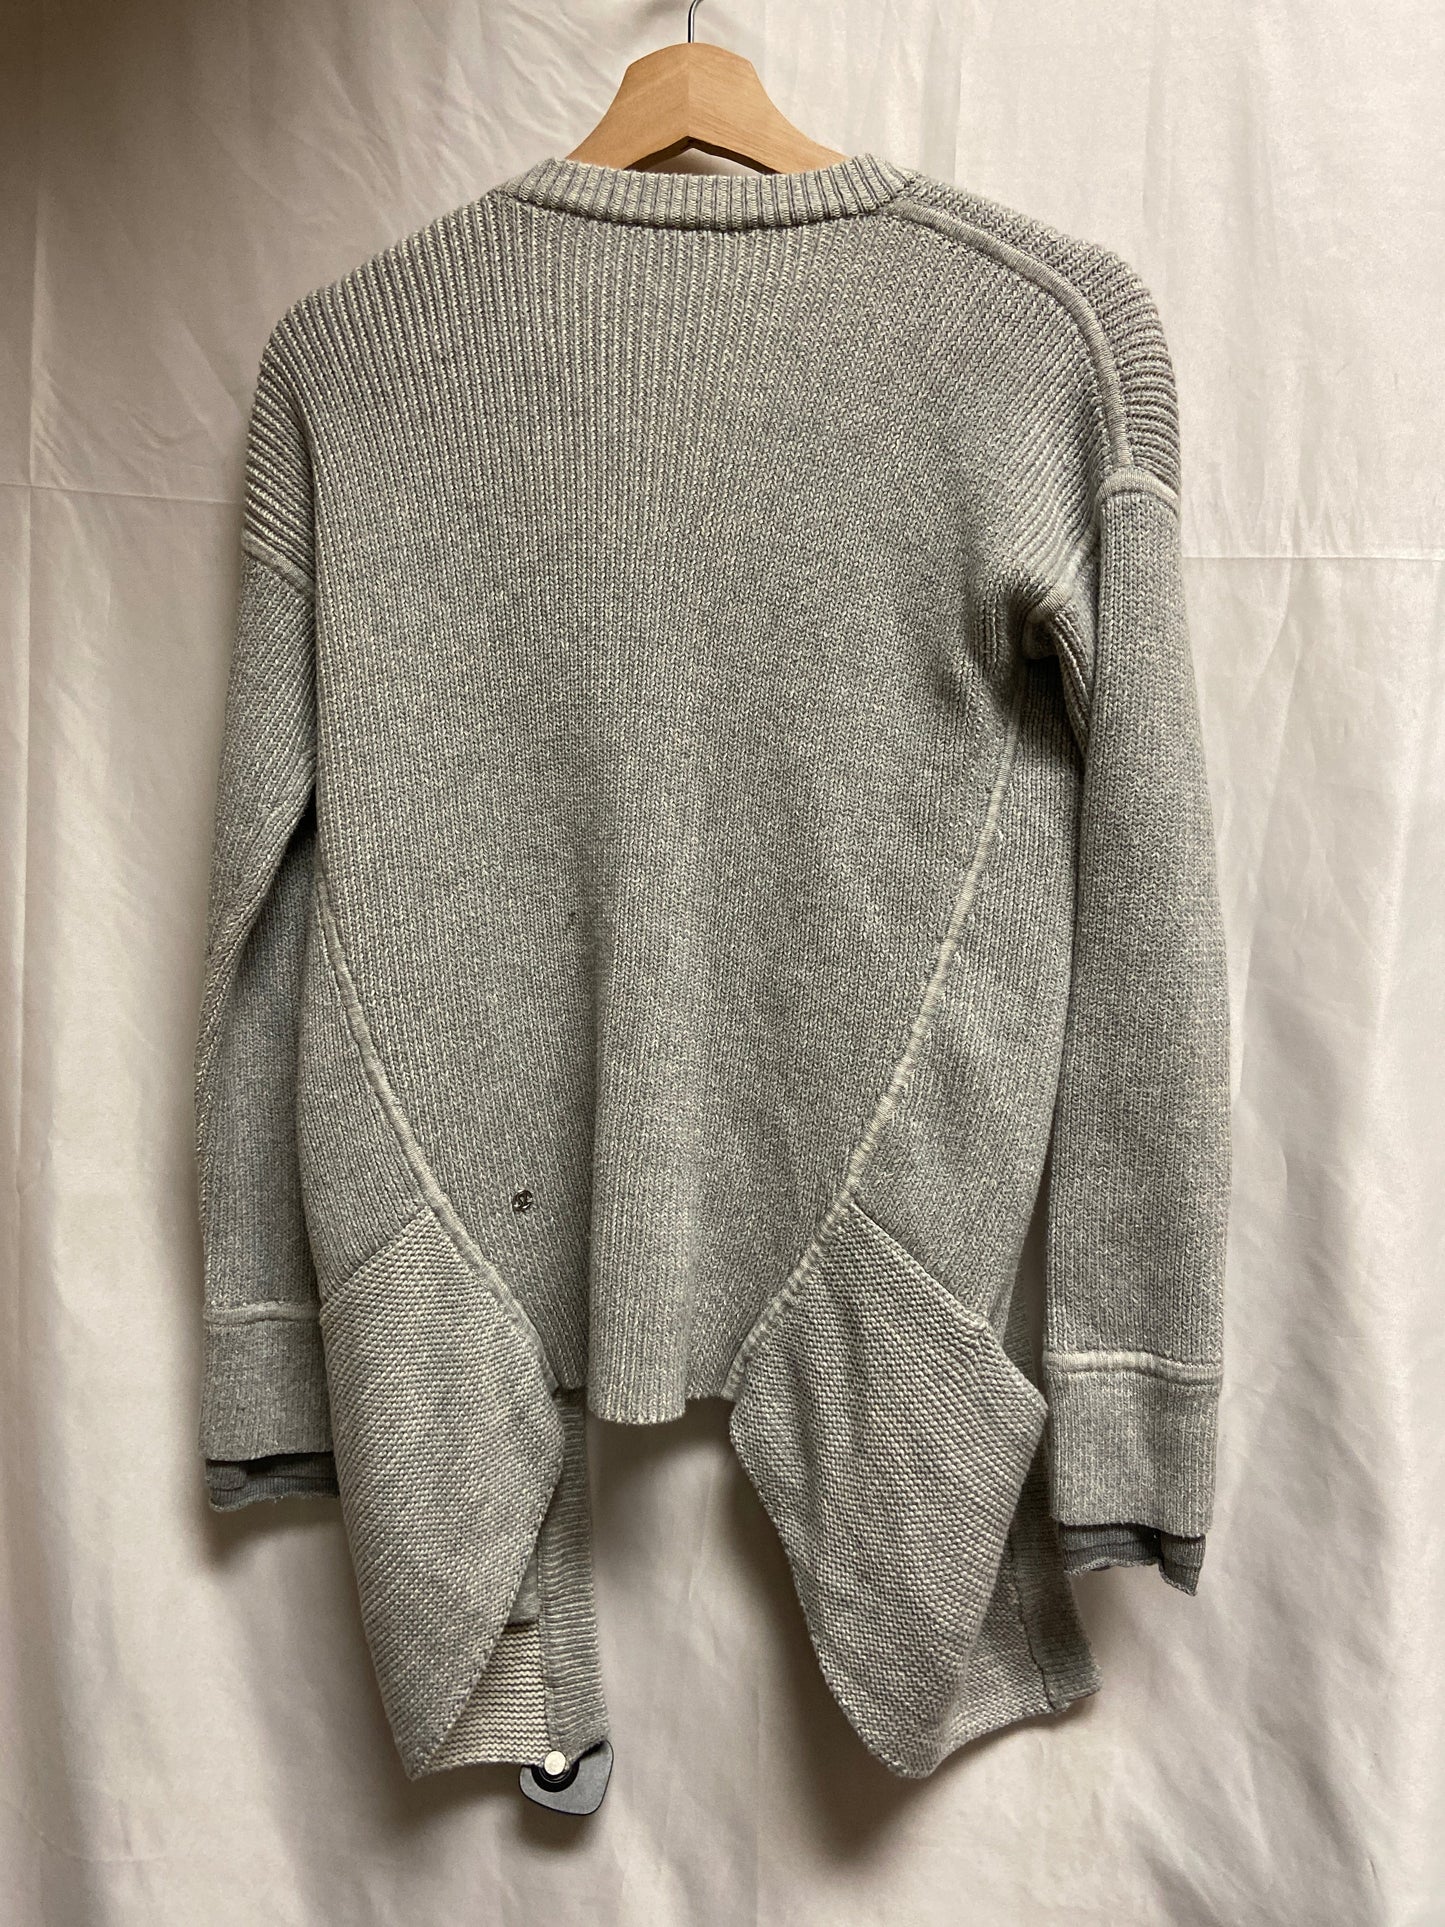 Sweater Cardigan Designer By Lululemon  Size: Xs